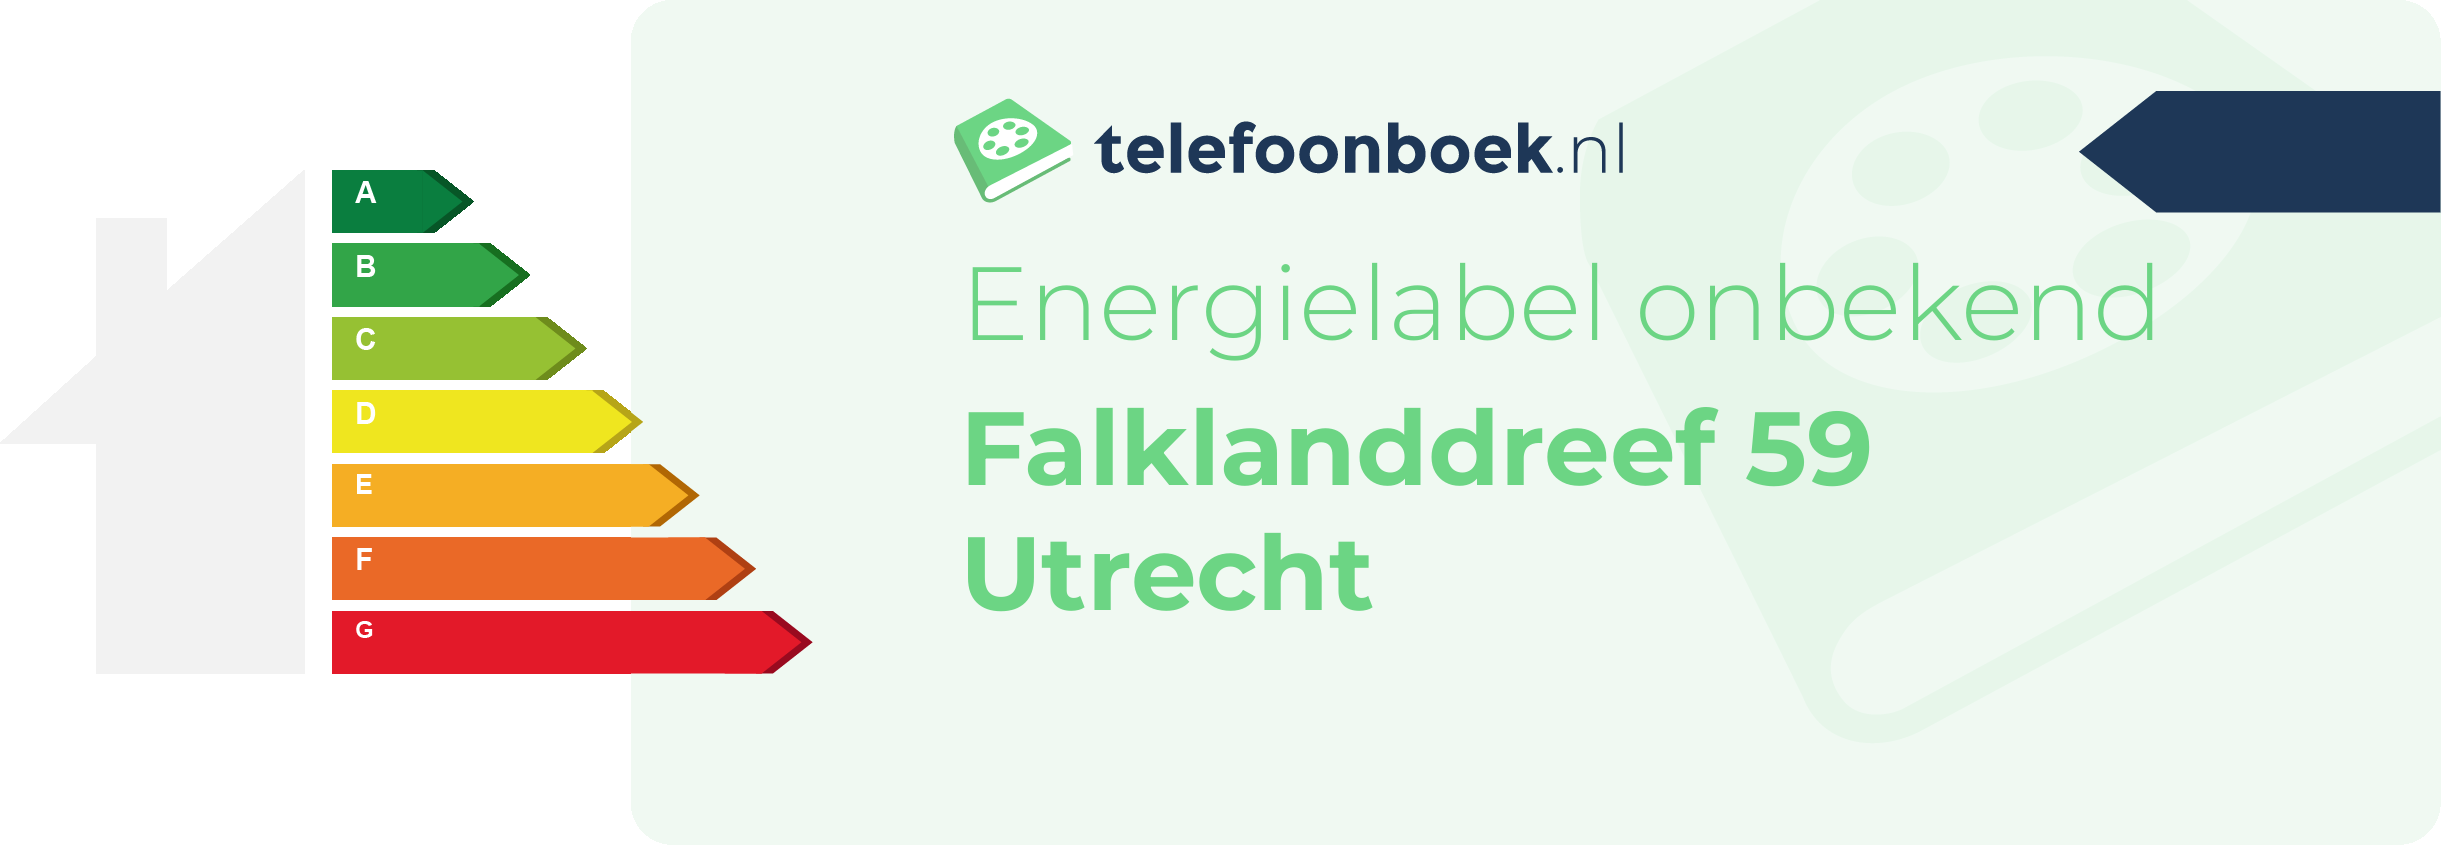 Energielabel Falklanddreef 59 Utrecht